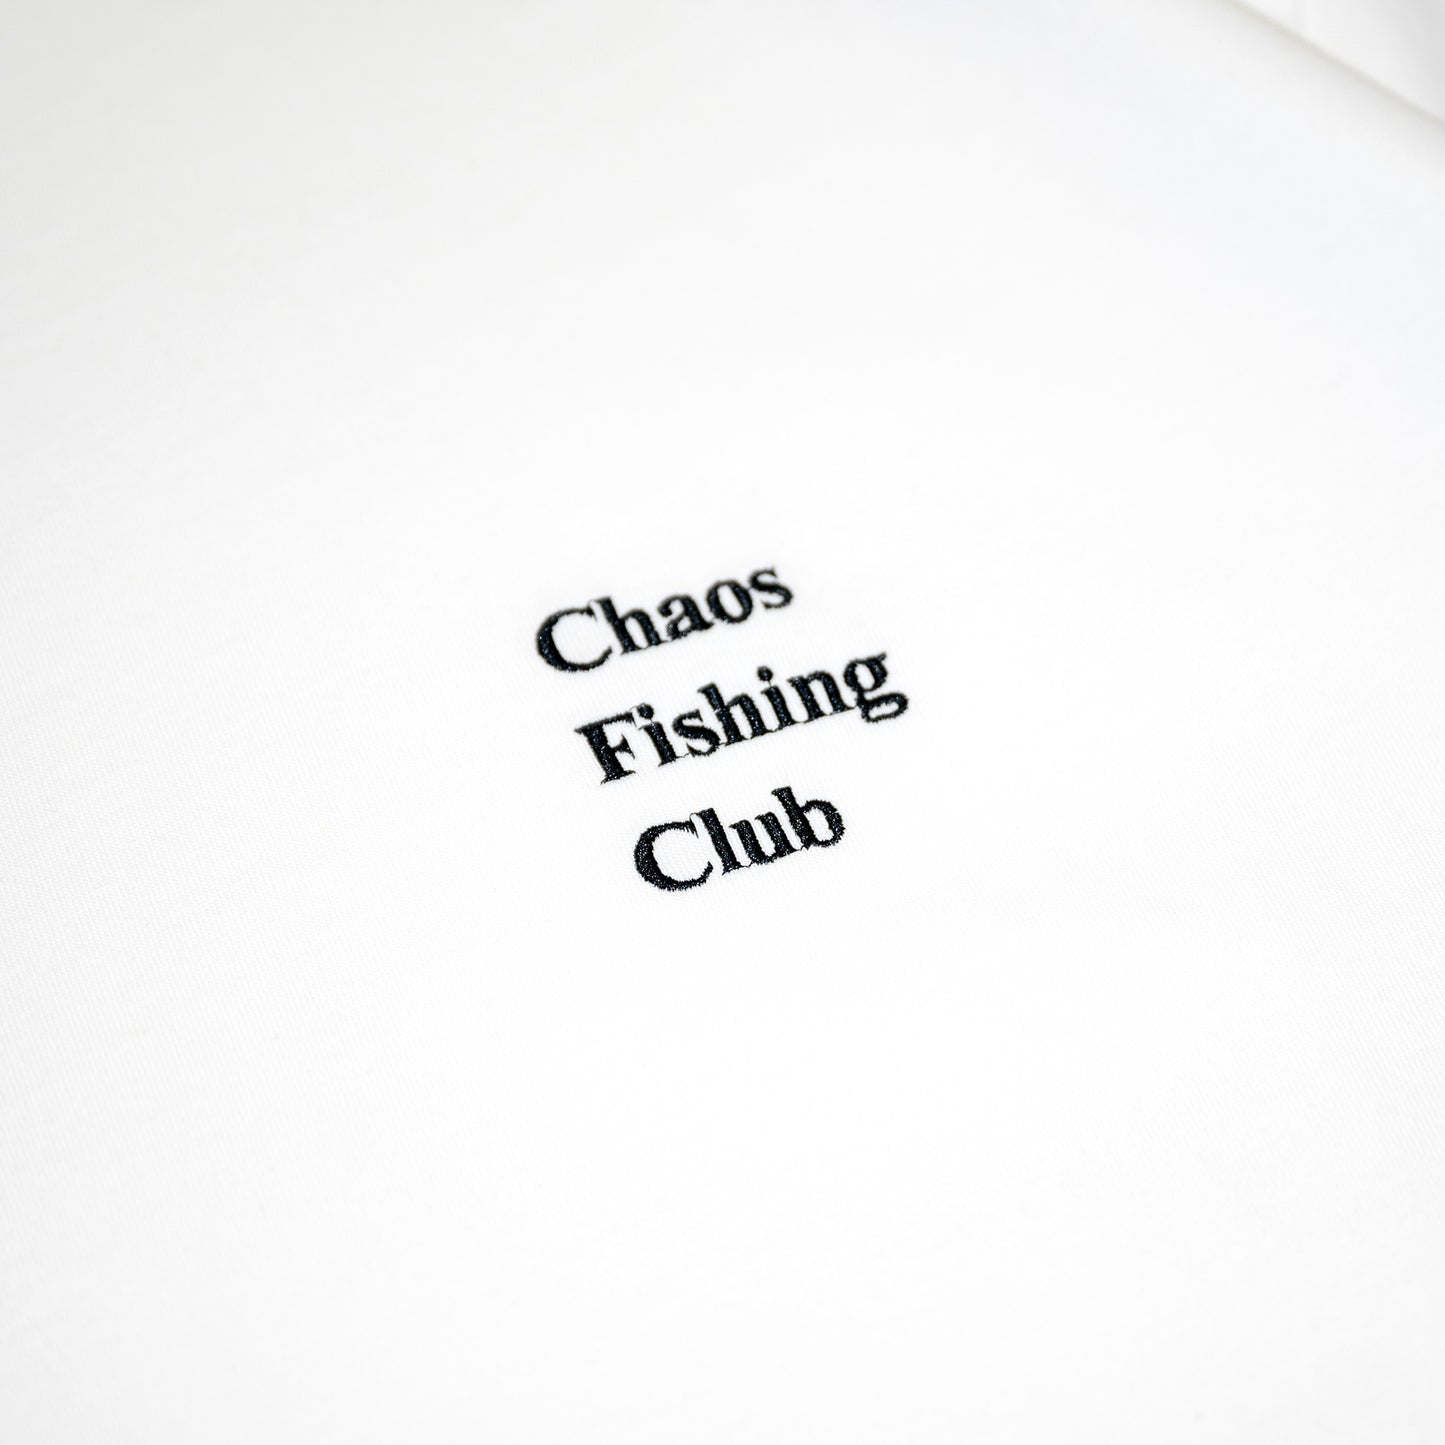 CHAOS FISHING CLUB CFC LOGO CREWNECK S/S TEE - WHITE